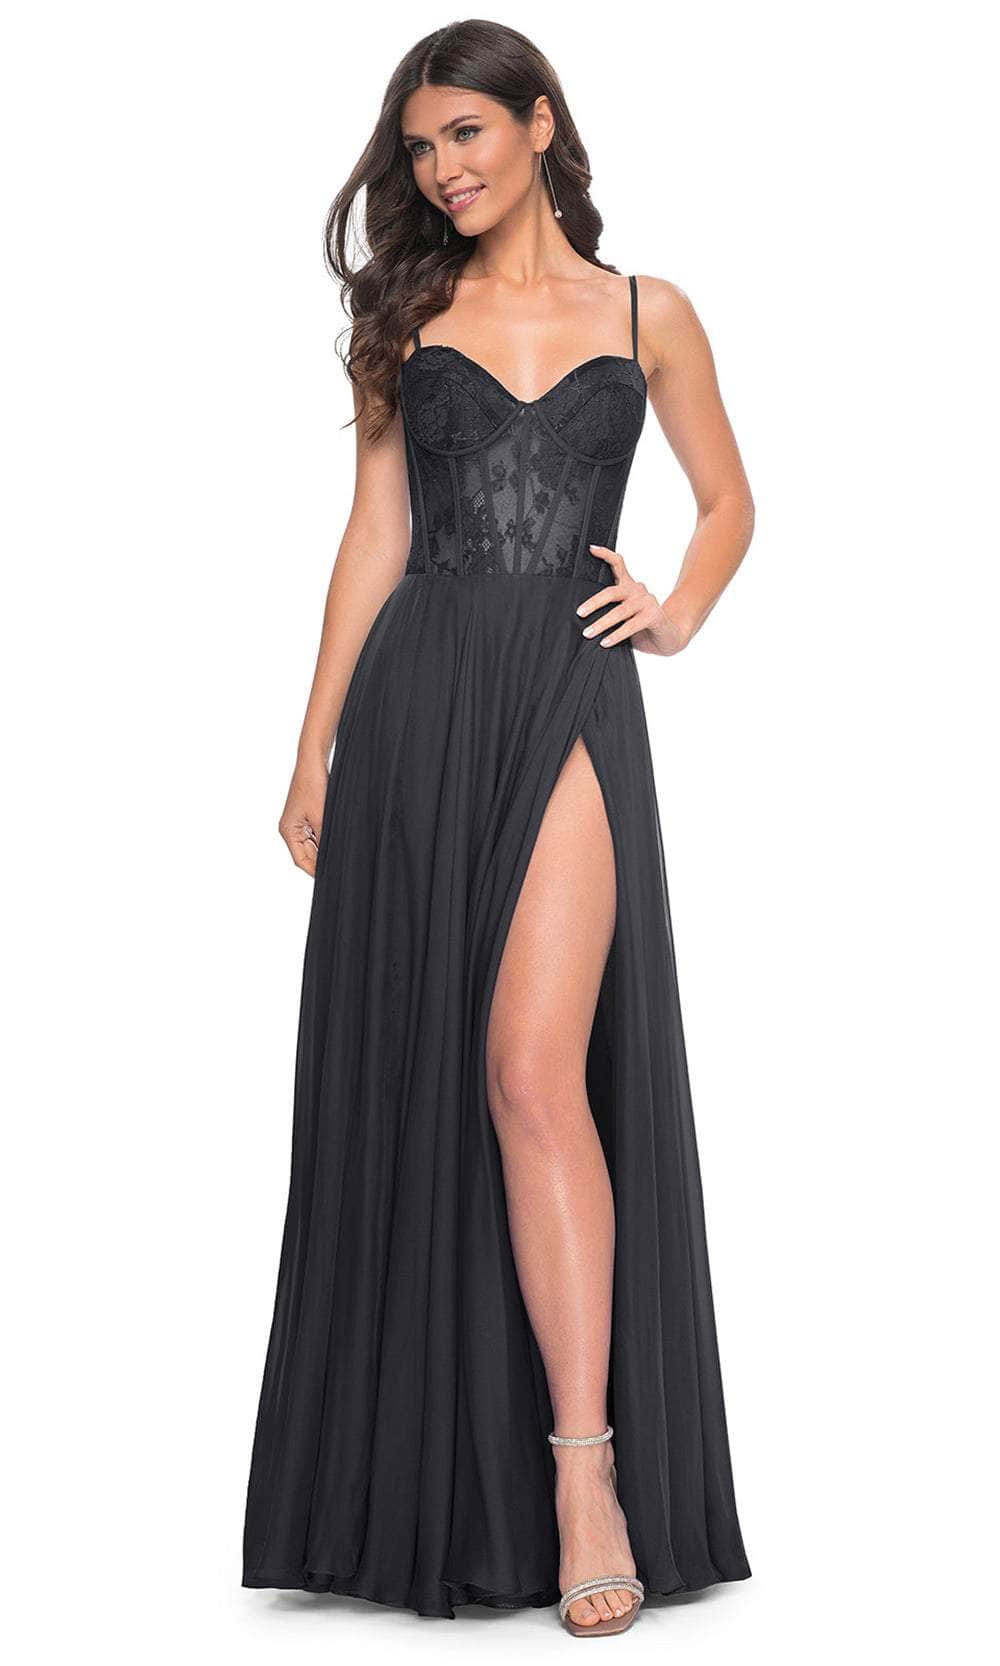 La Femme 32276 - Lace Bustier Prom Dress
